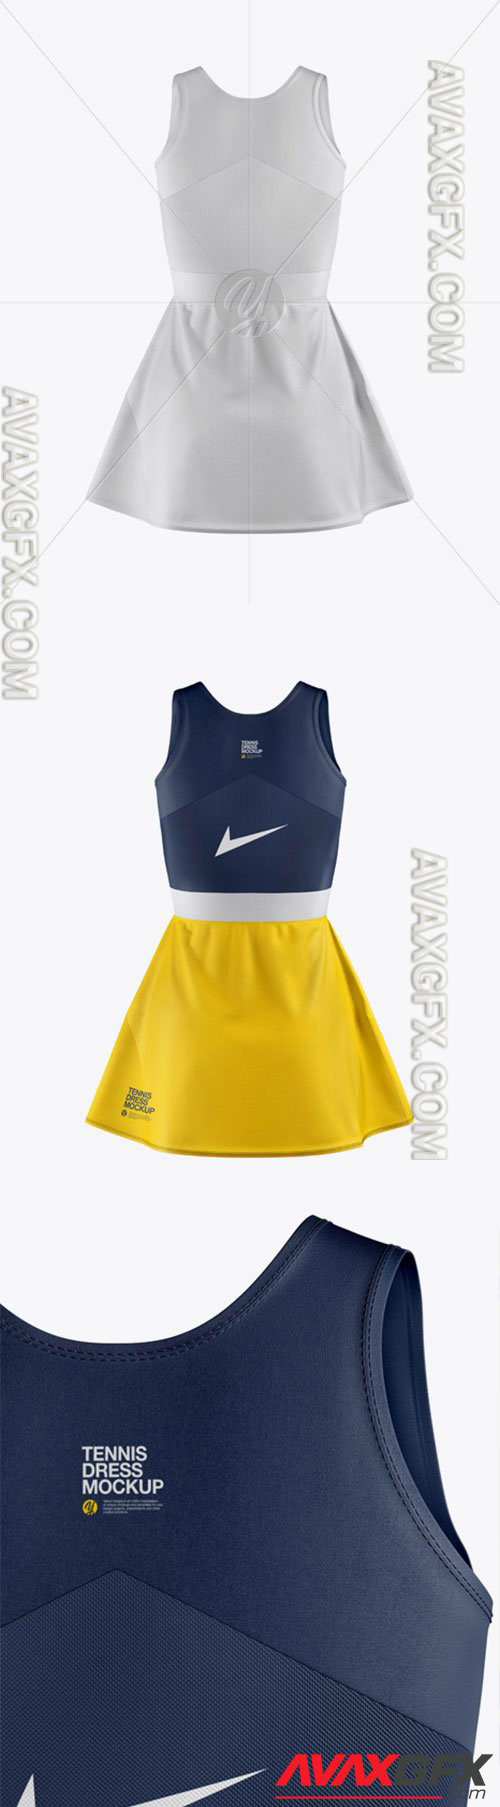 Women’s Tennis Dress Mockup 32483